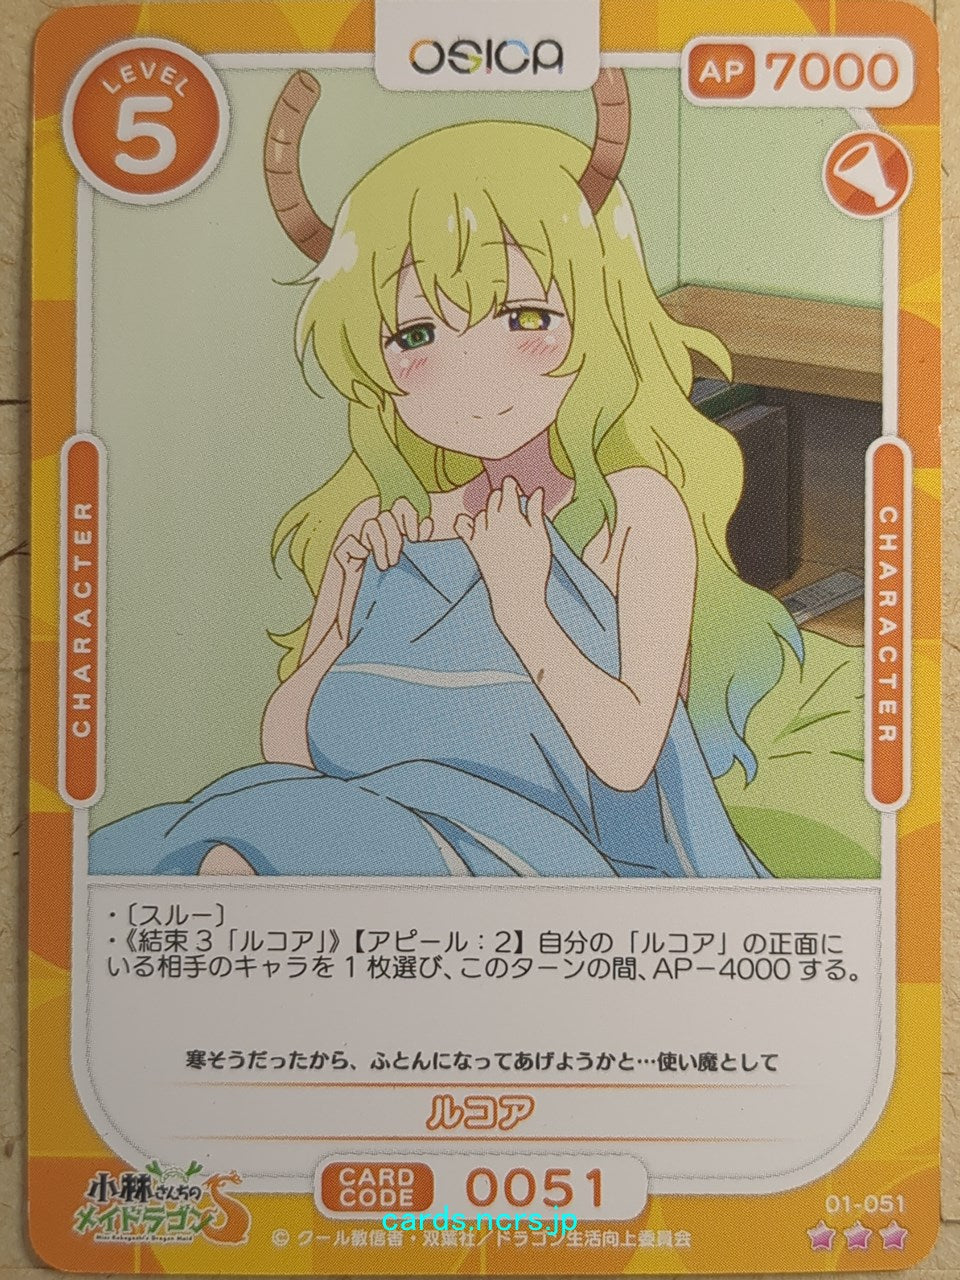 OSICA Miss Kobayashi's Dragon Maid -Lucoa-   Trading Card OS/KOB-01-051